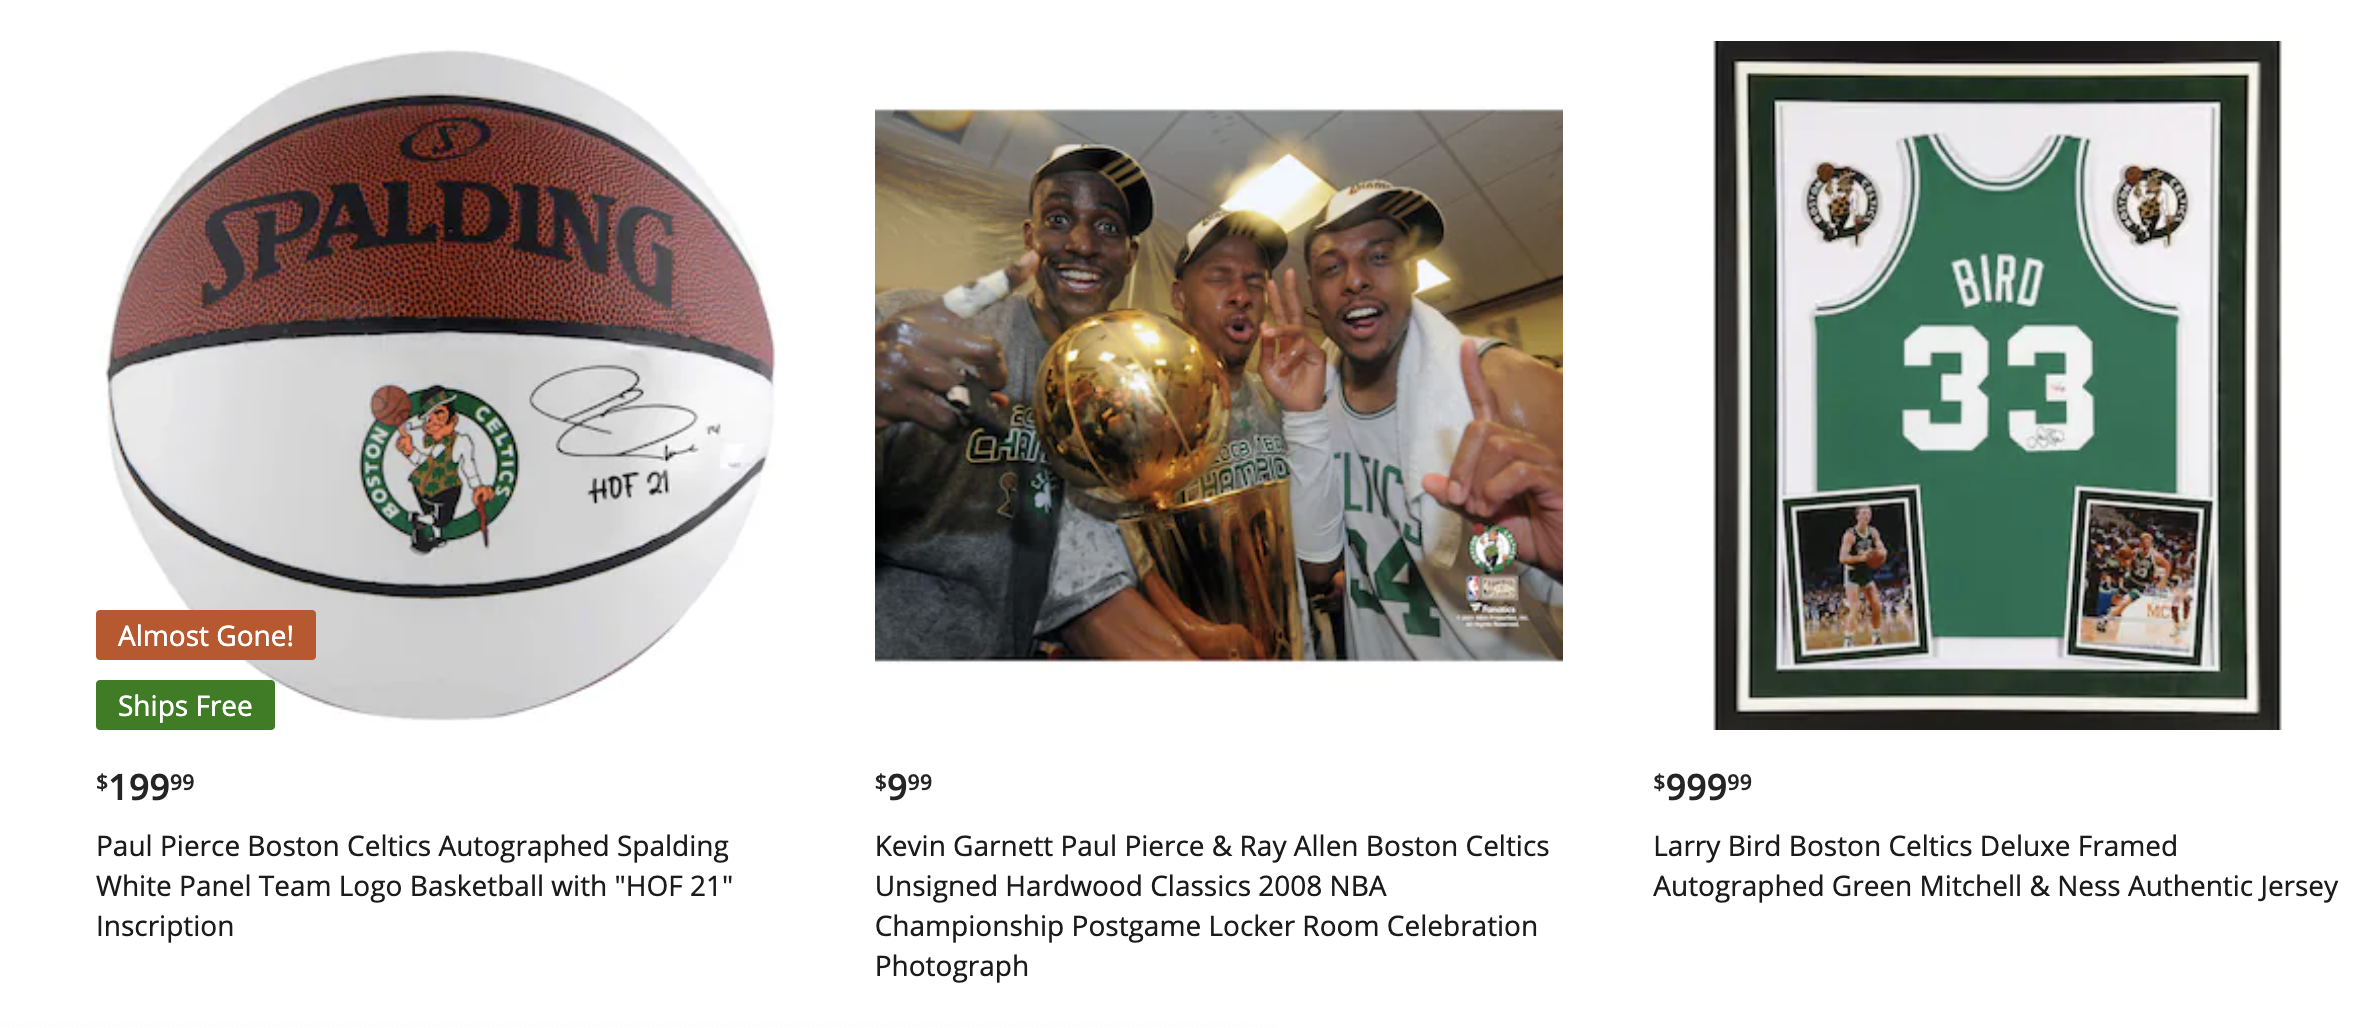 Jayson Tatum Boston Celtics Autographed Green Nike Authentic Jersey